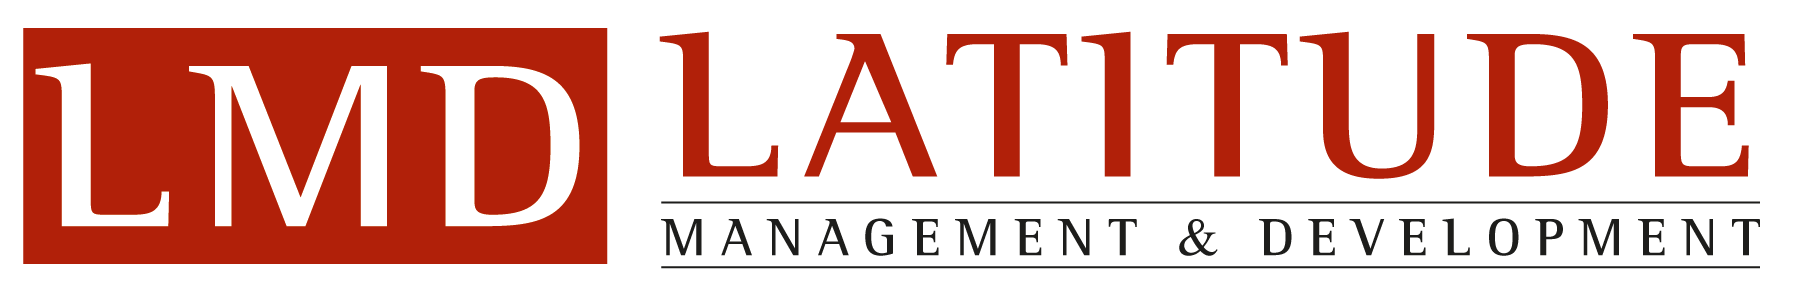 Latitude Management & Development